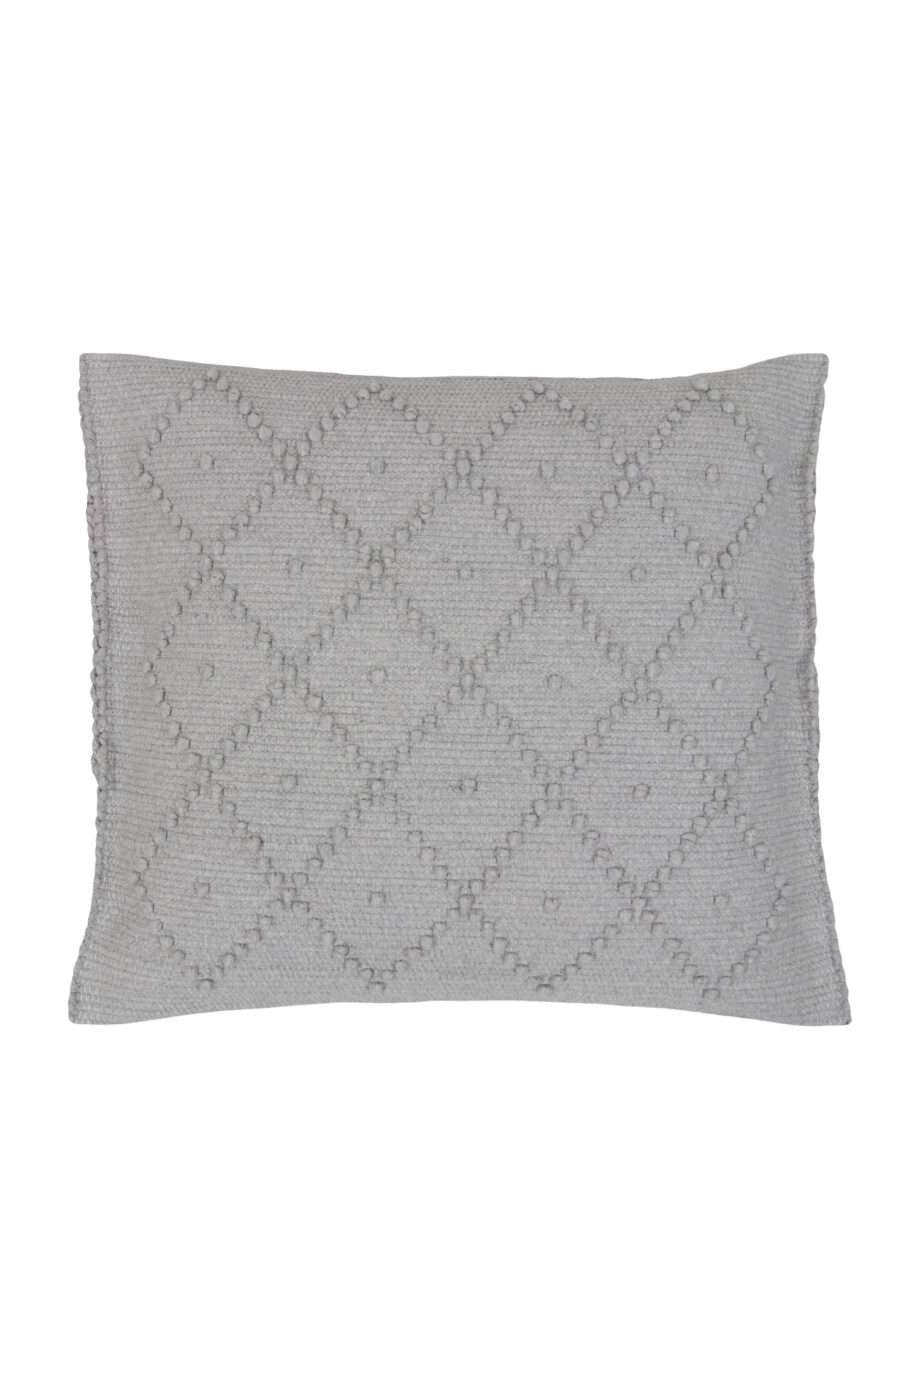 diamond light grey woven cotton pillowcase medium